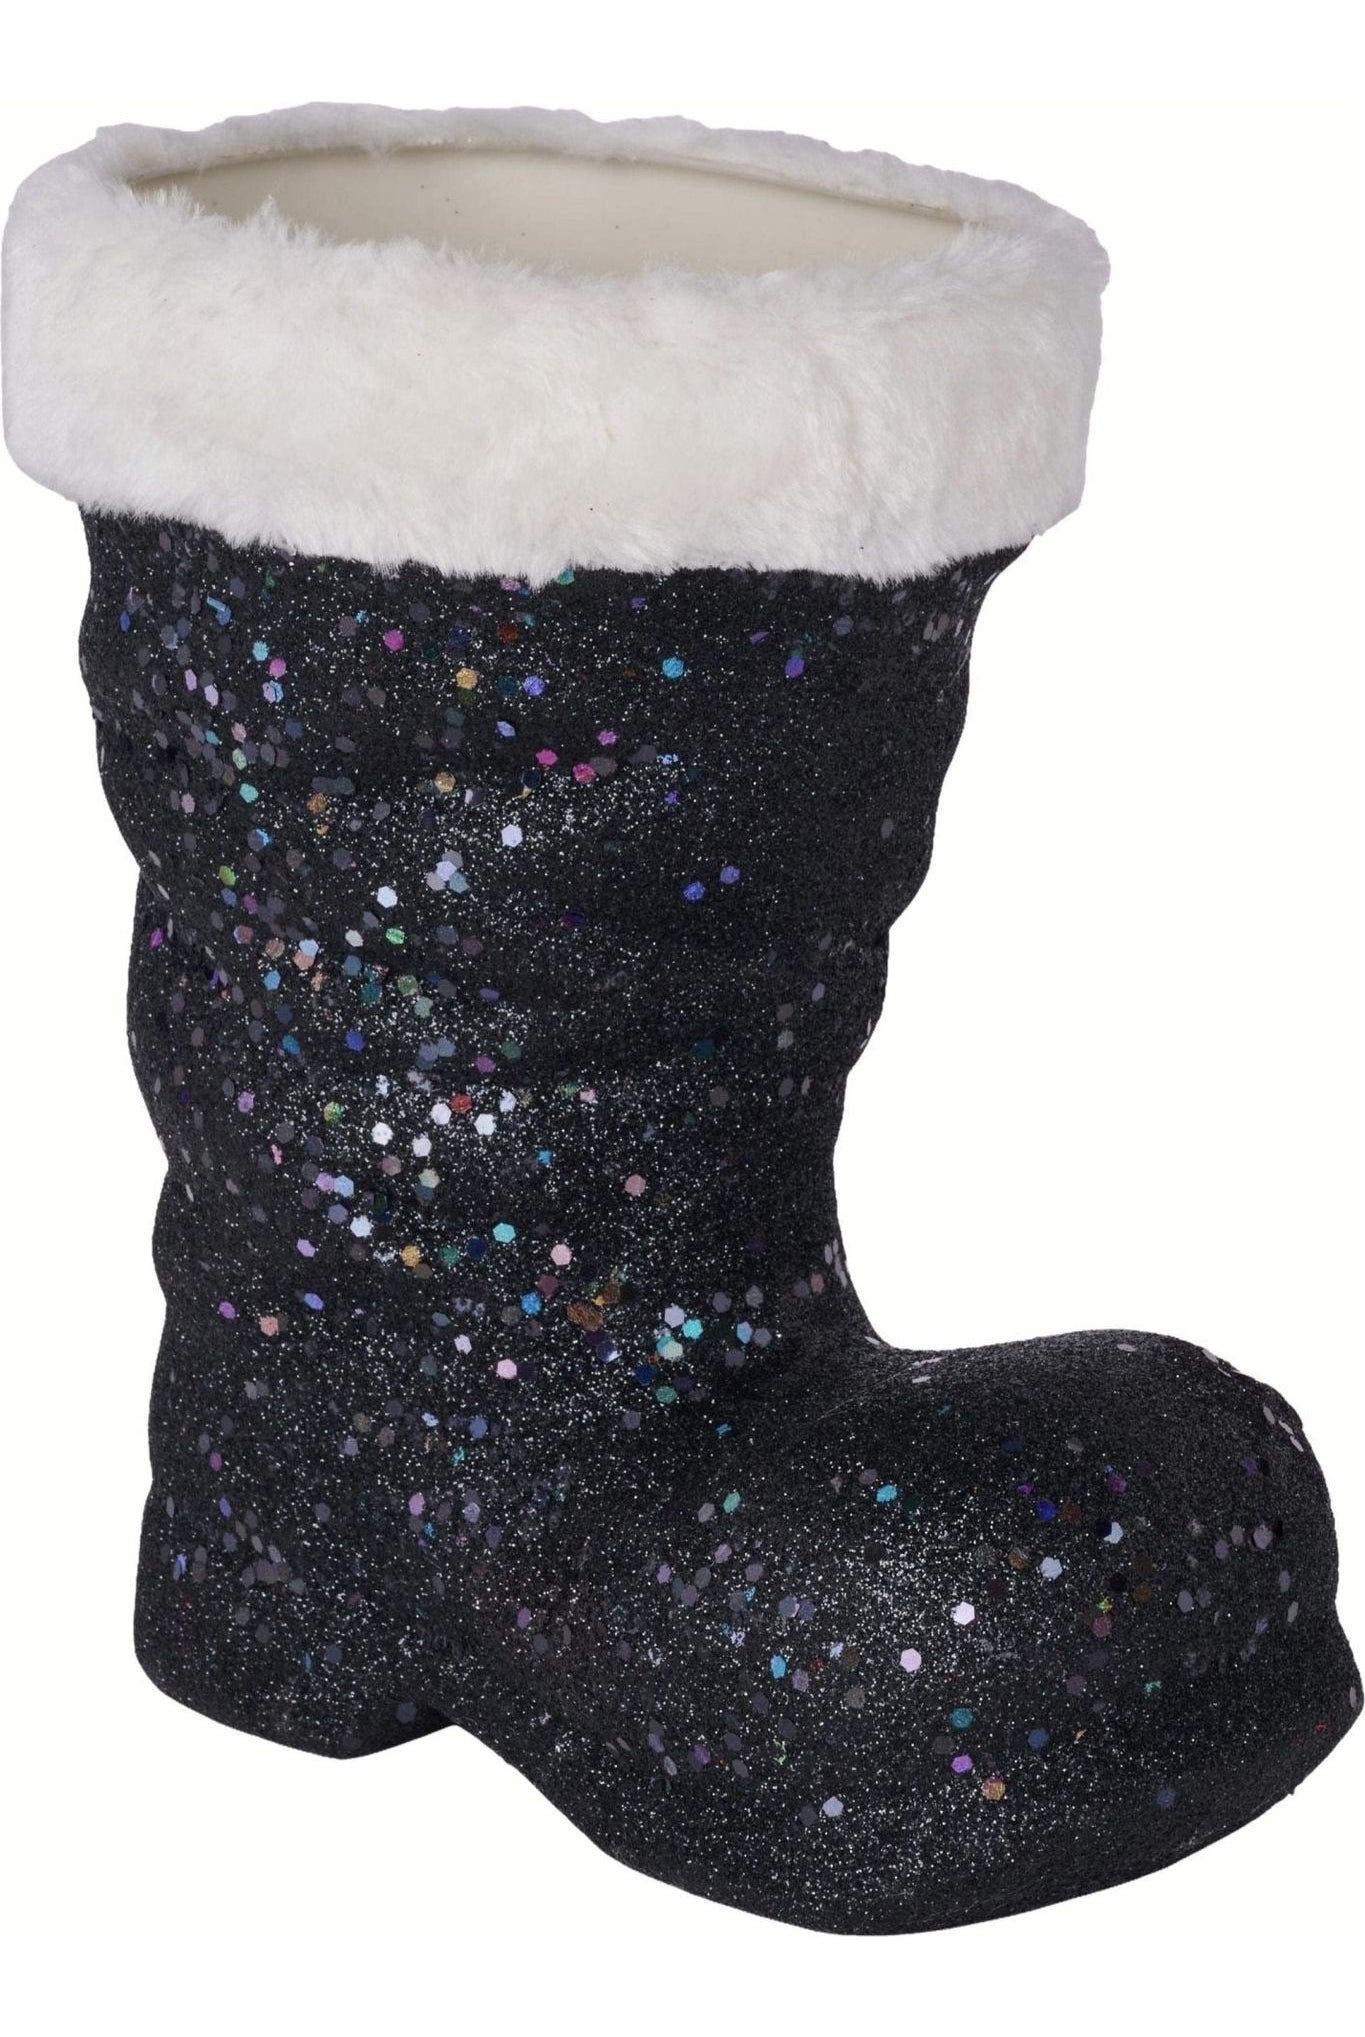 Shop For 9.5" Glitter Fur Santa Boot: Black XC723402